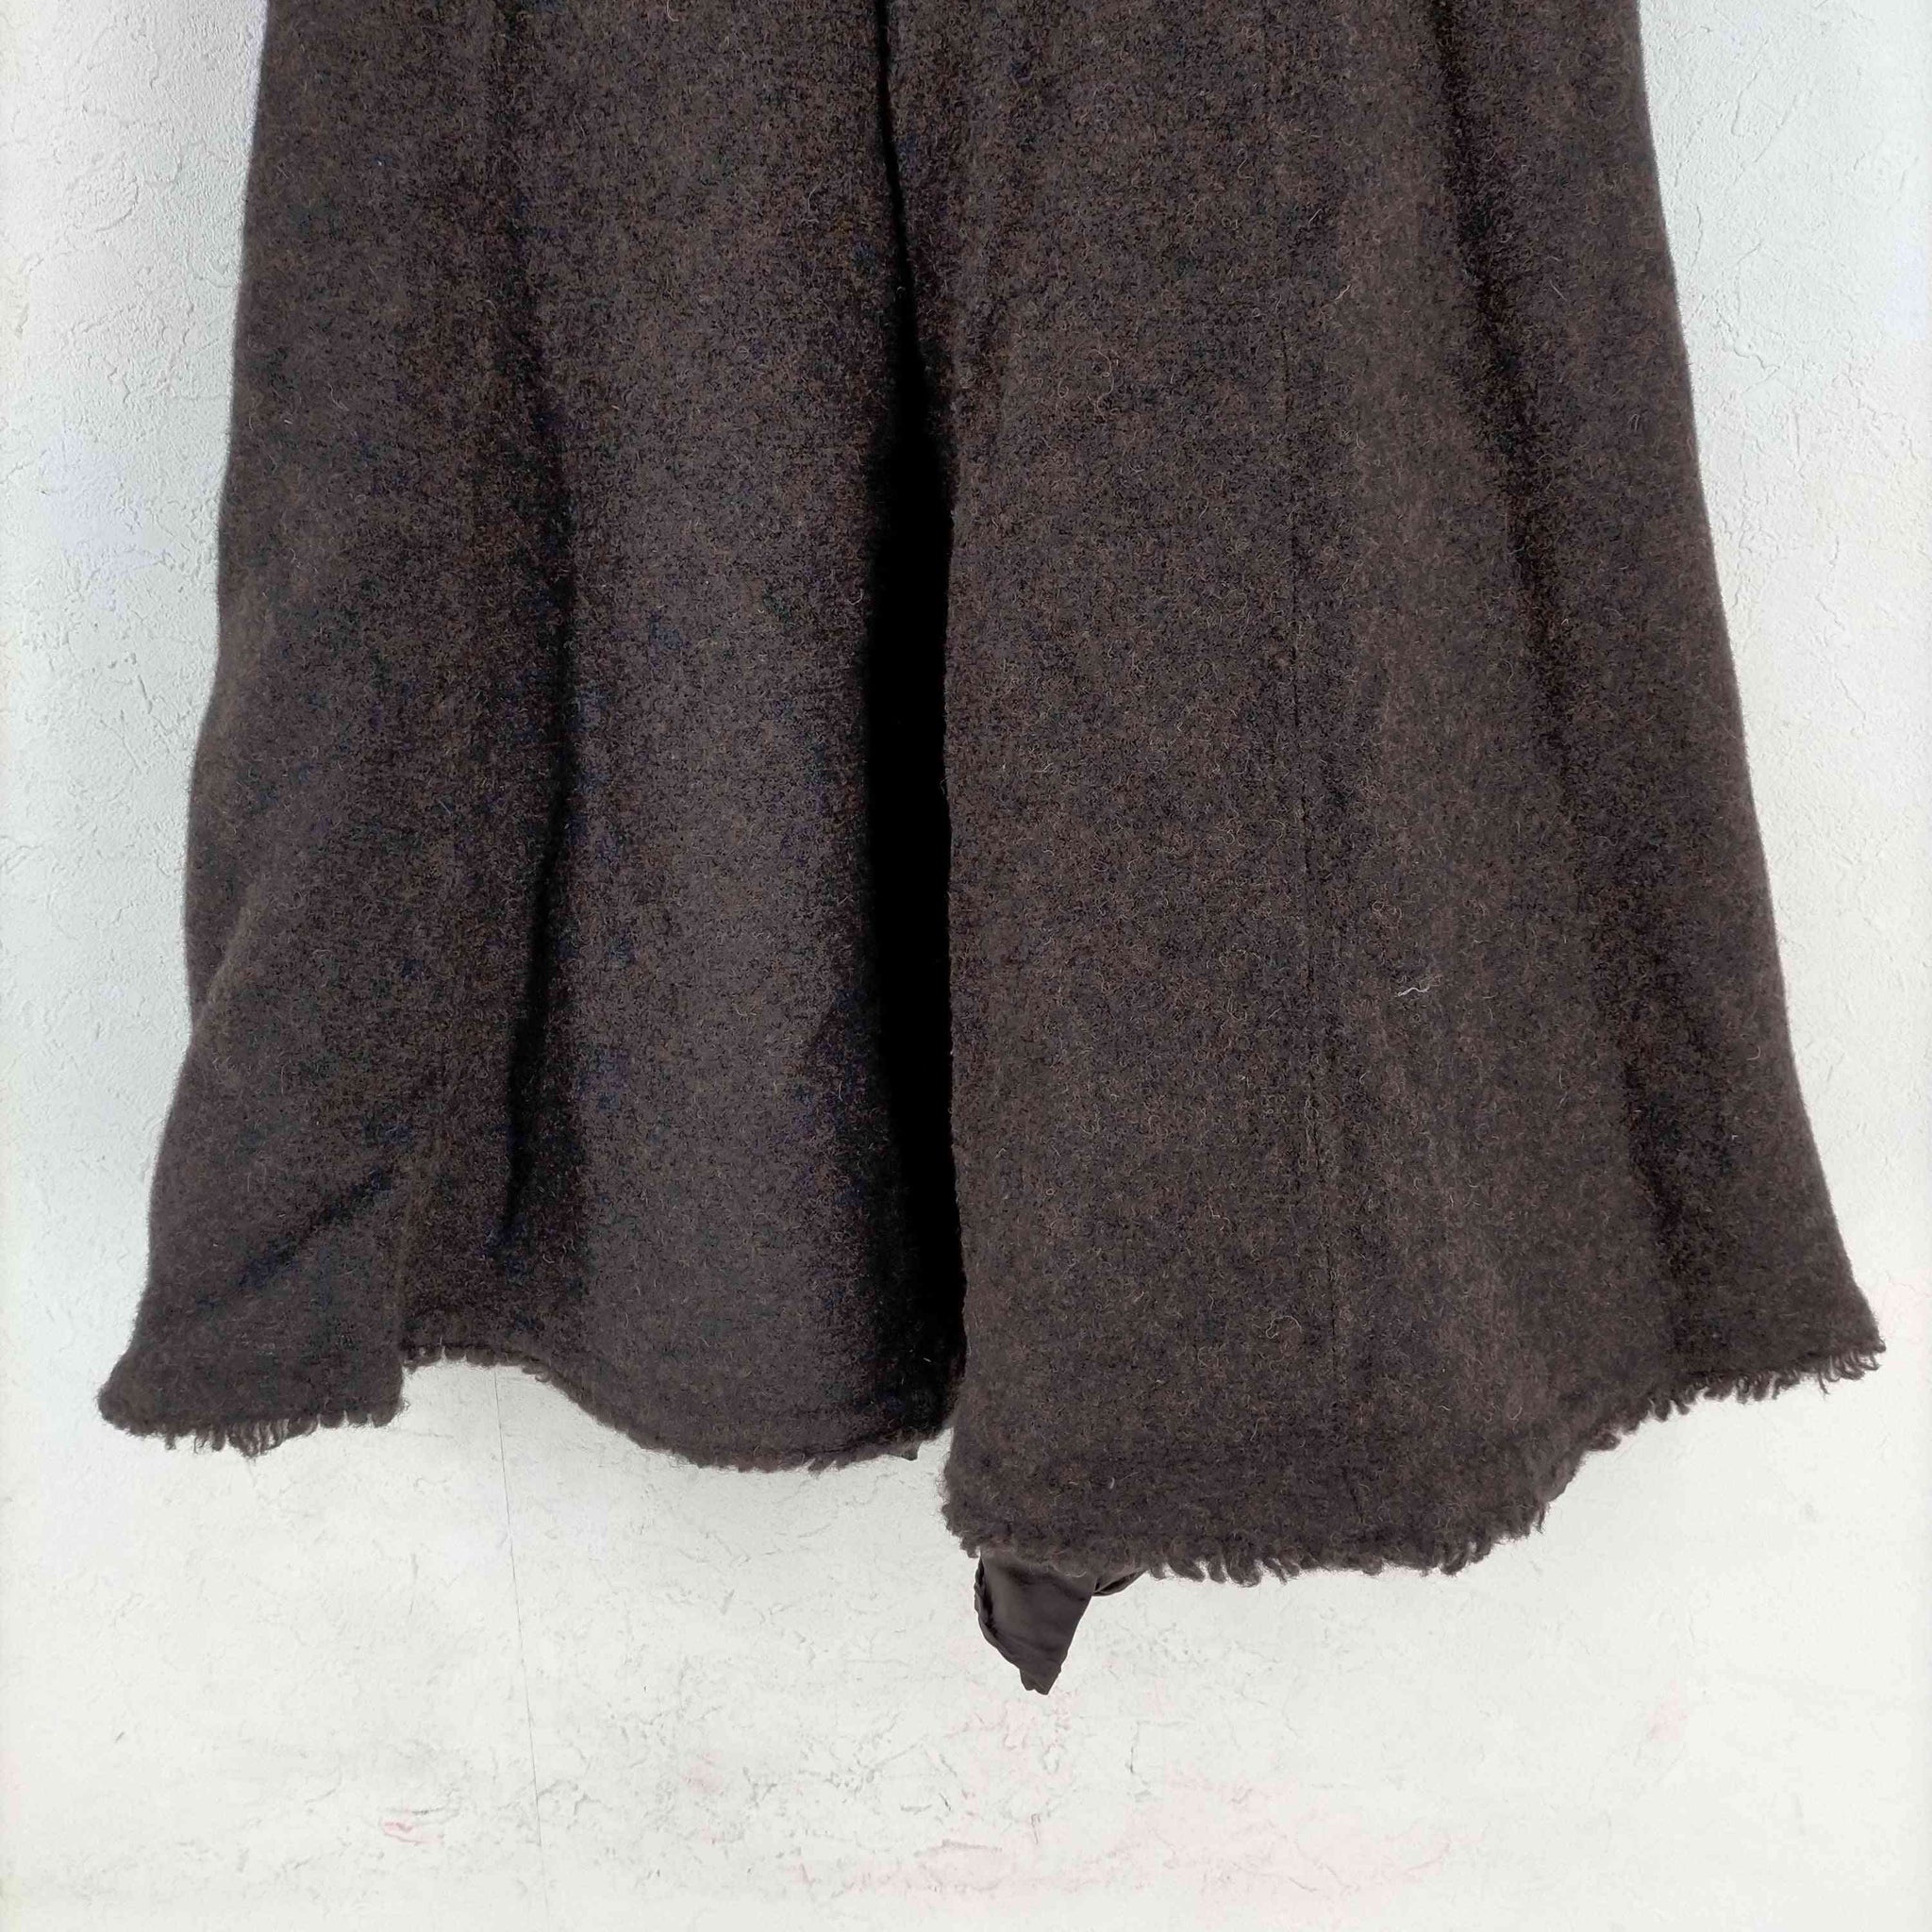 GALLARDAGALANTE(ガリャルダガランテ)ブリティッシュツイードスカート